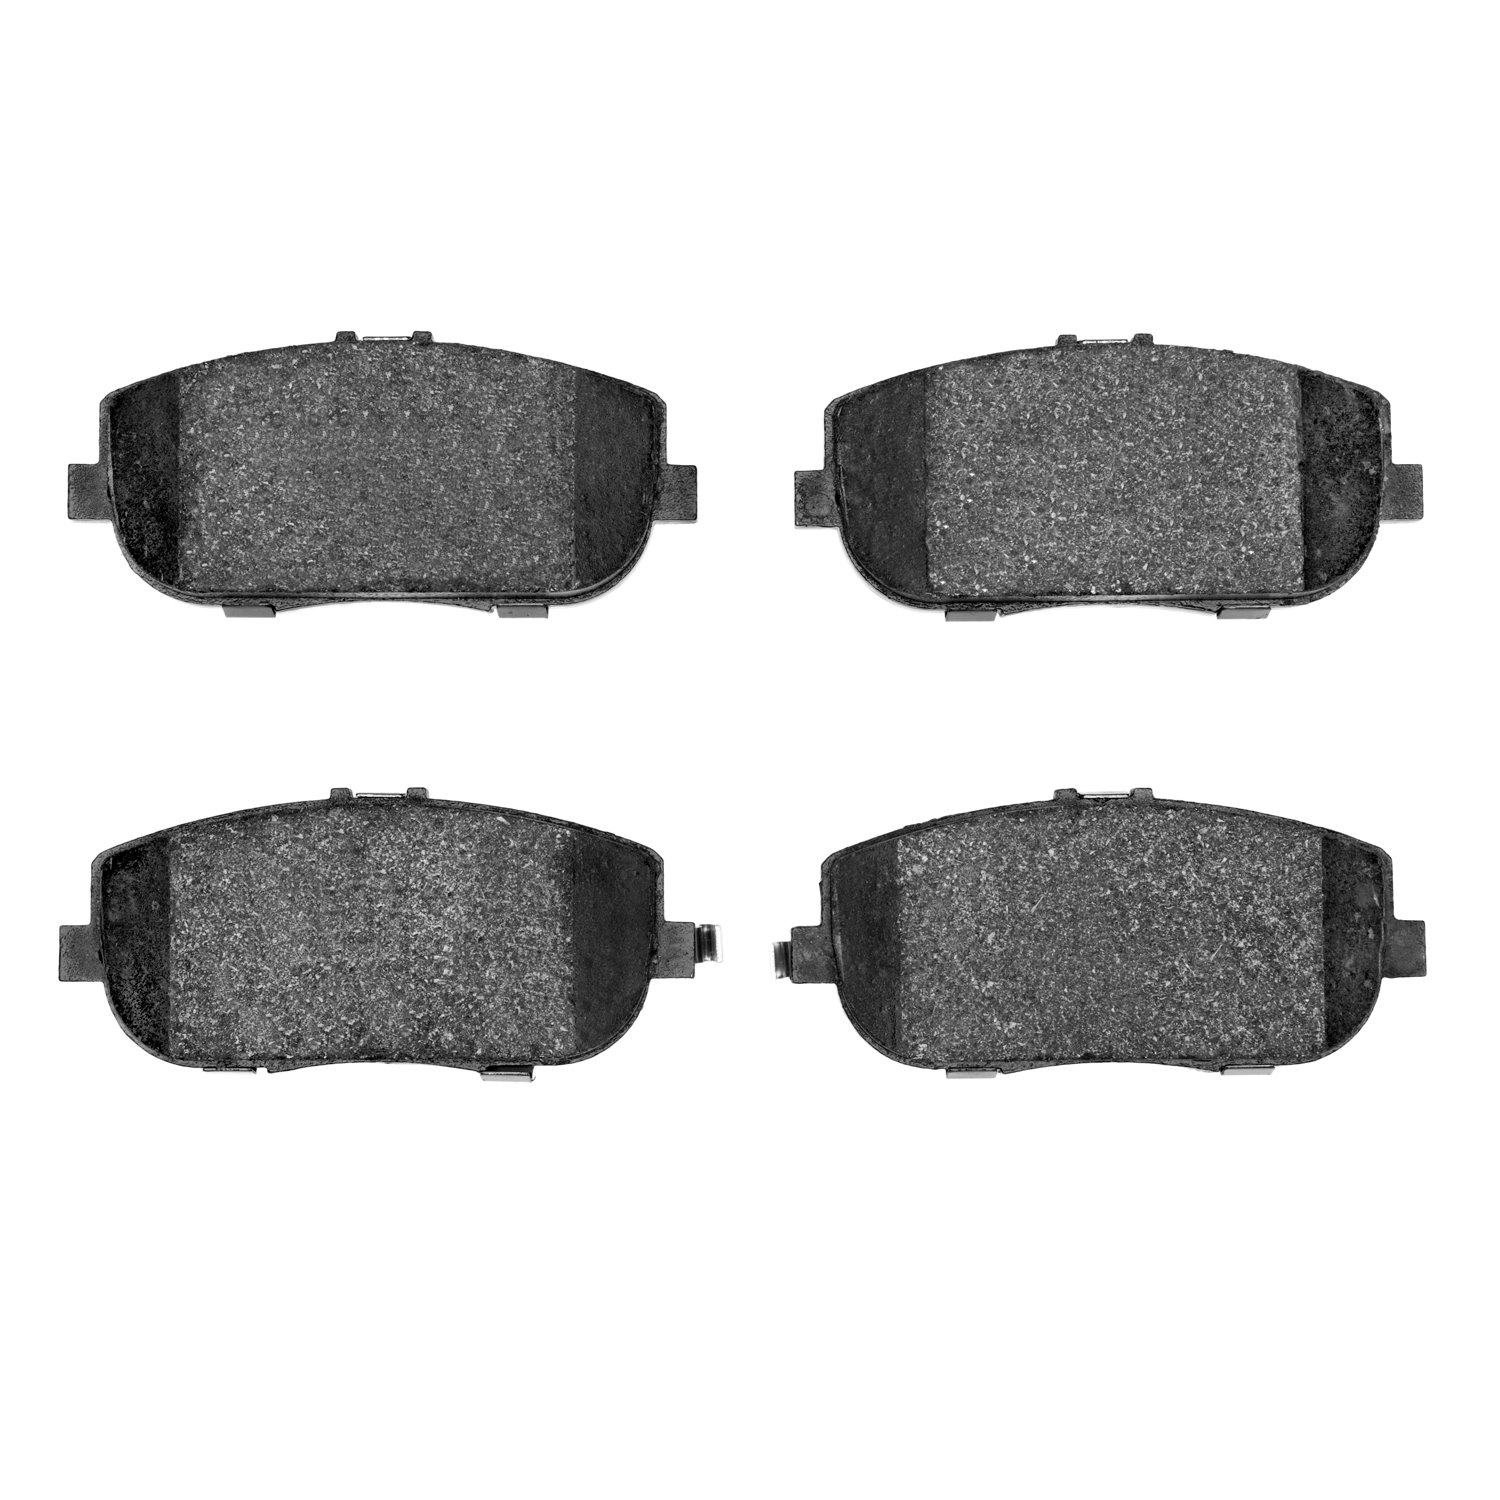 1310-1180-00 3000-Series Ceramic Brake Pads, Fits Select Multiple Makes/Models, Position: Rear